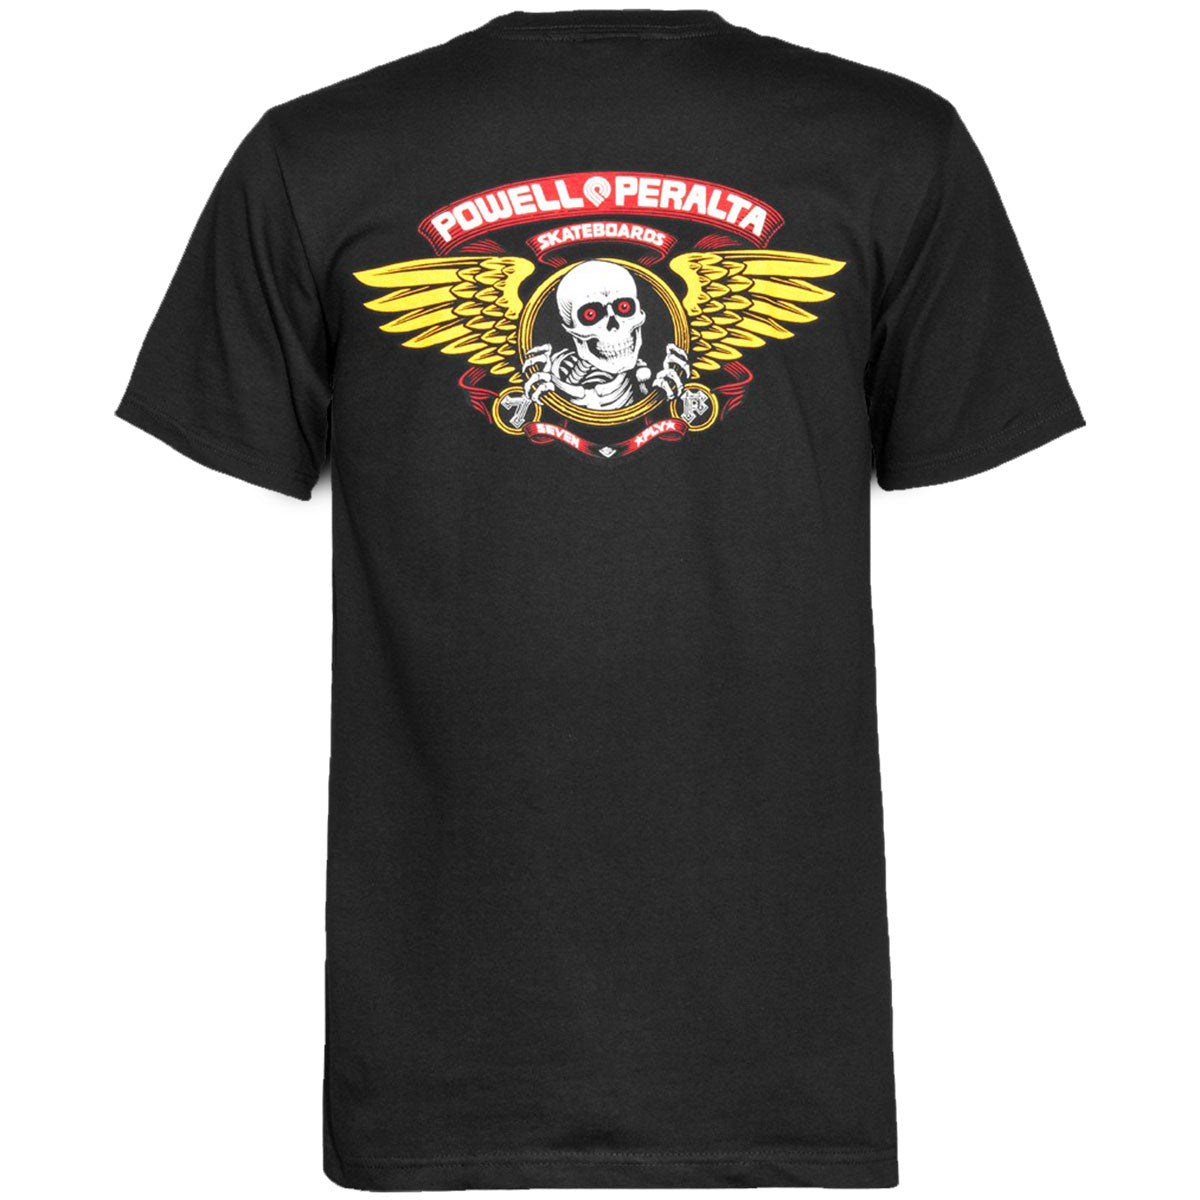 Powell-Peralta Winged Ripper T-Shirt - Black image 1